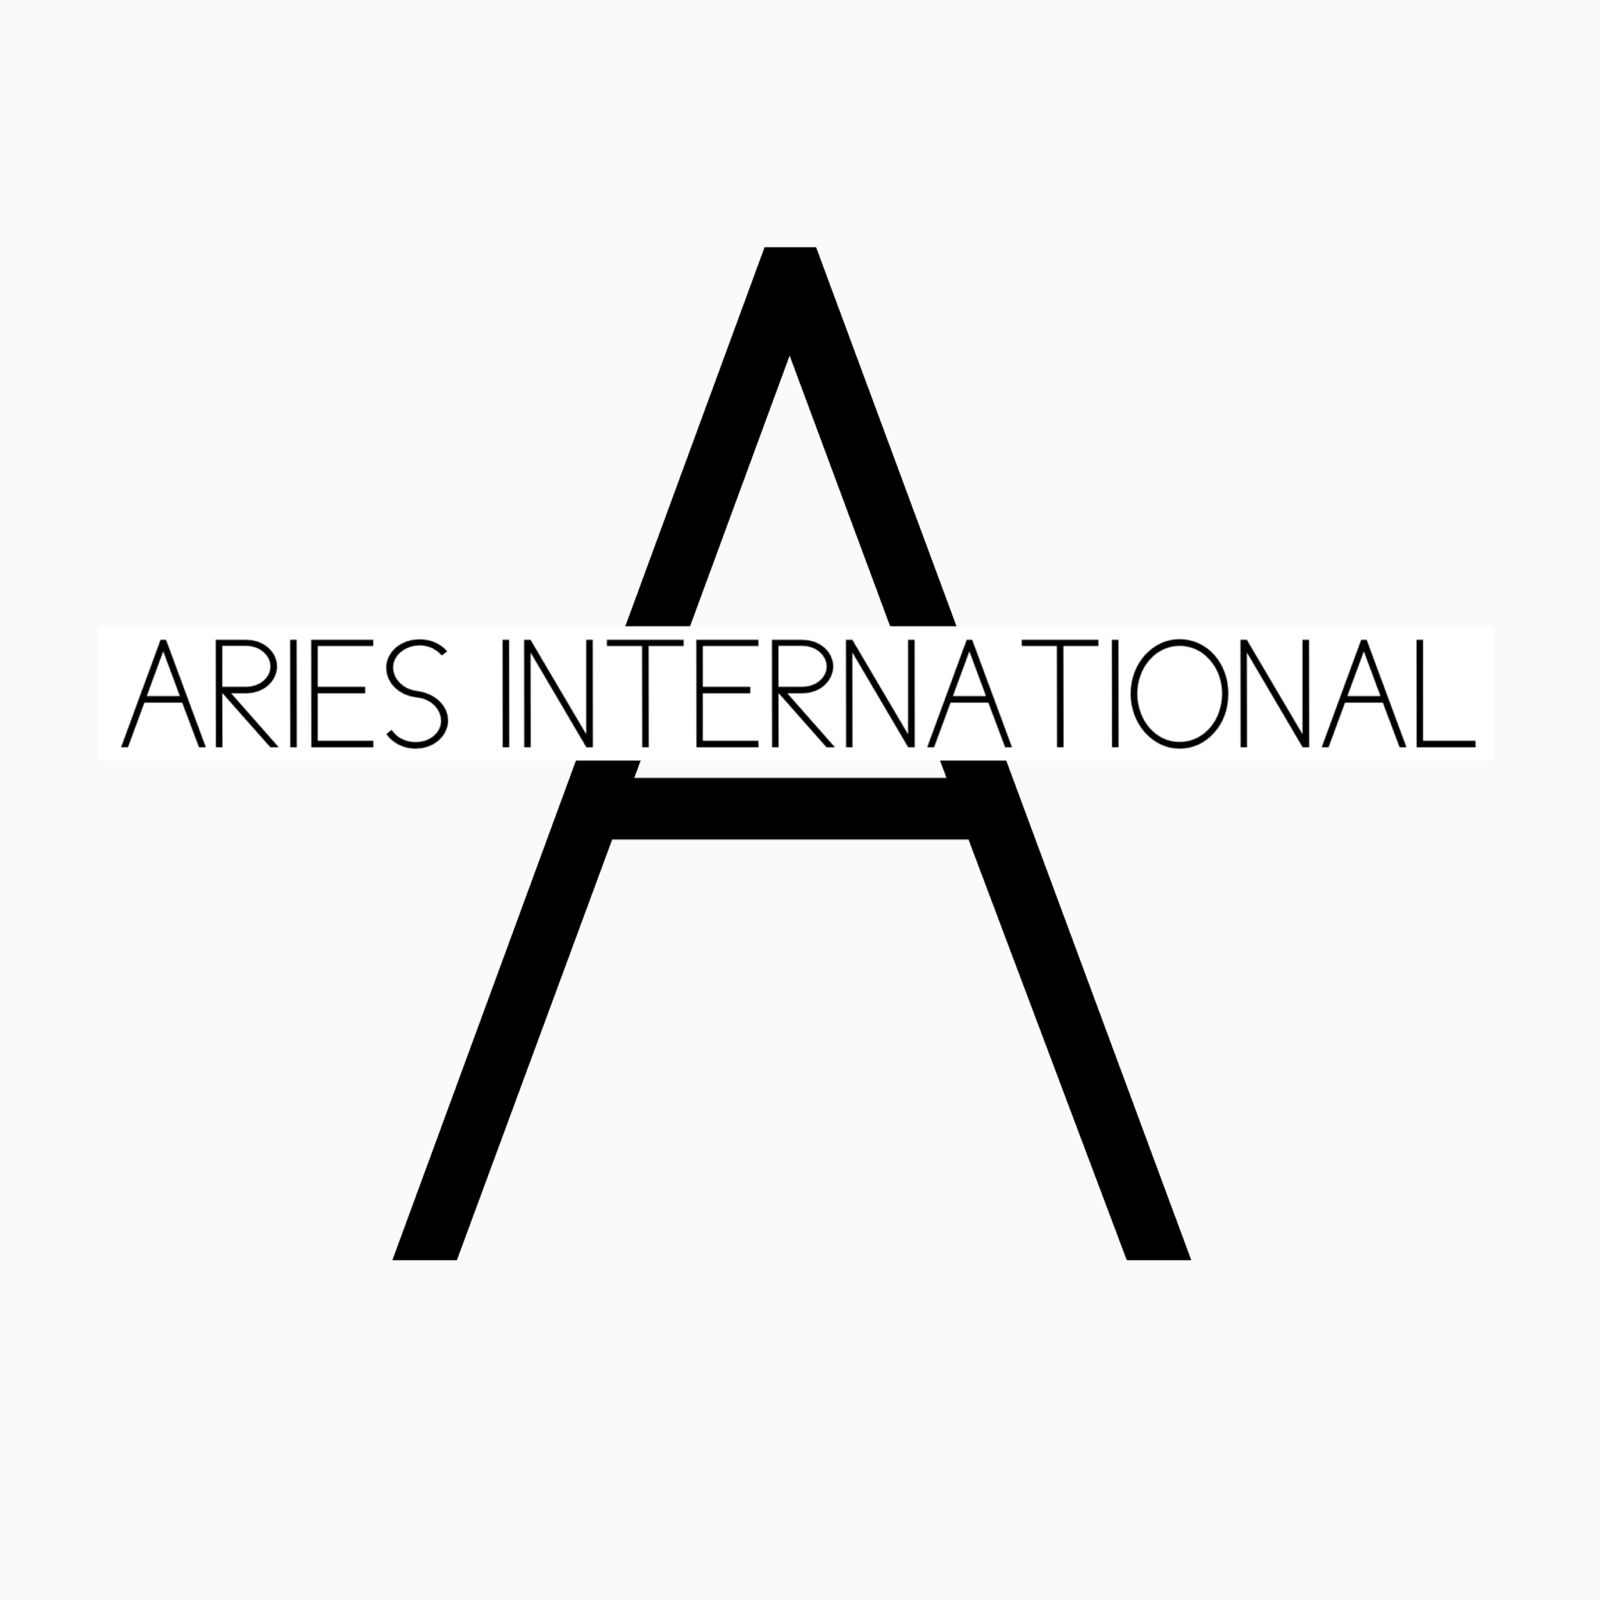 Aries International